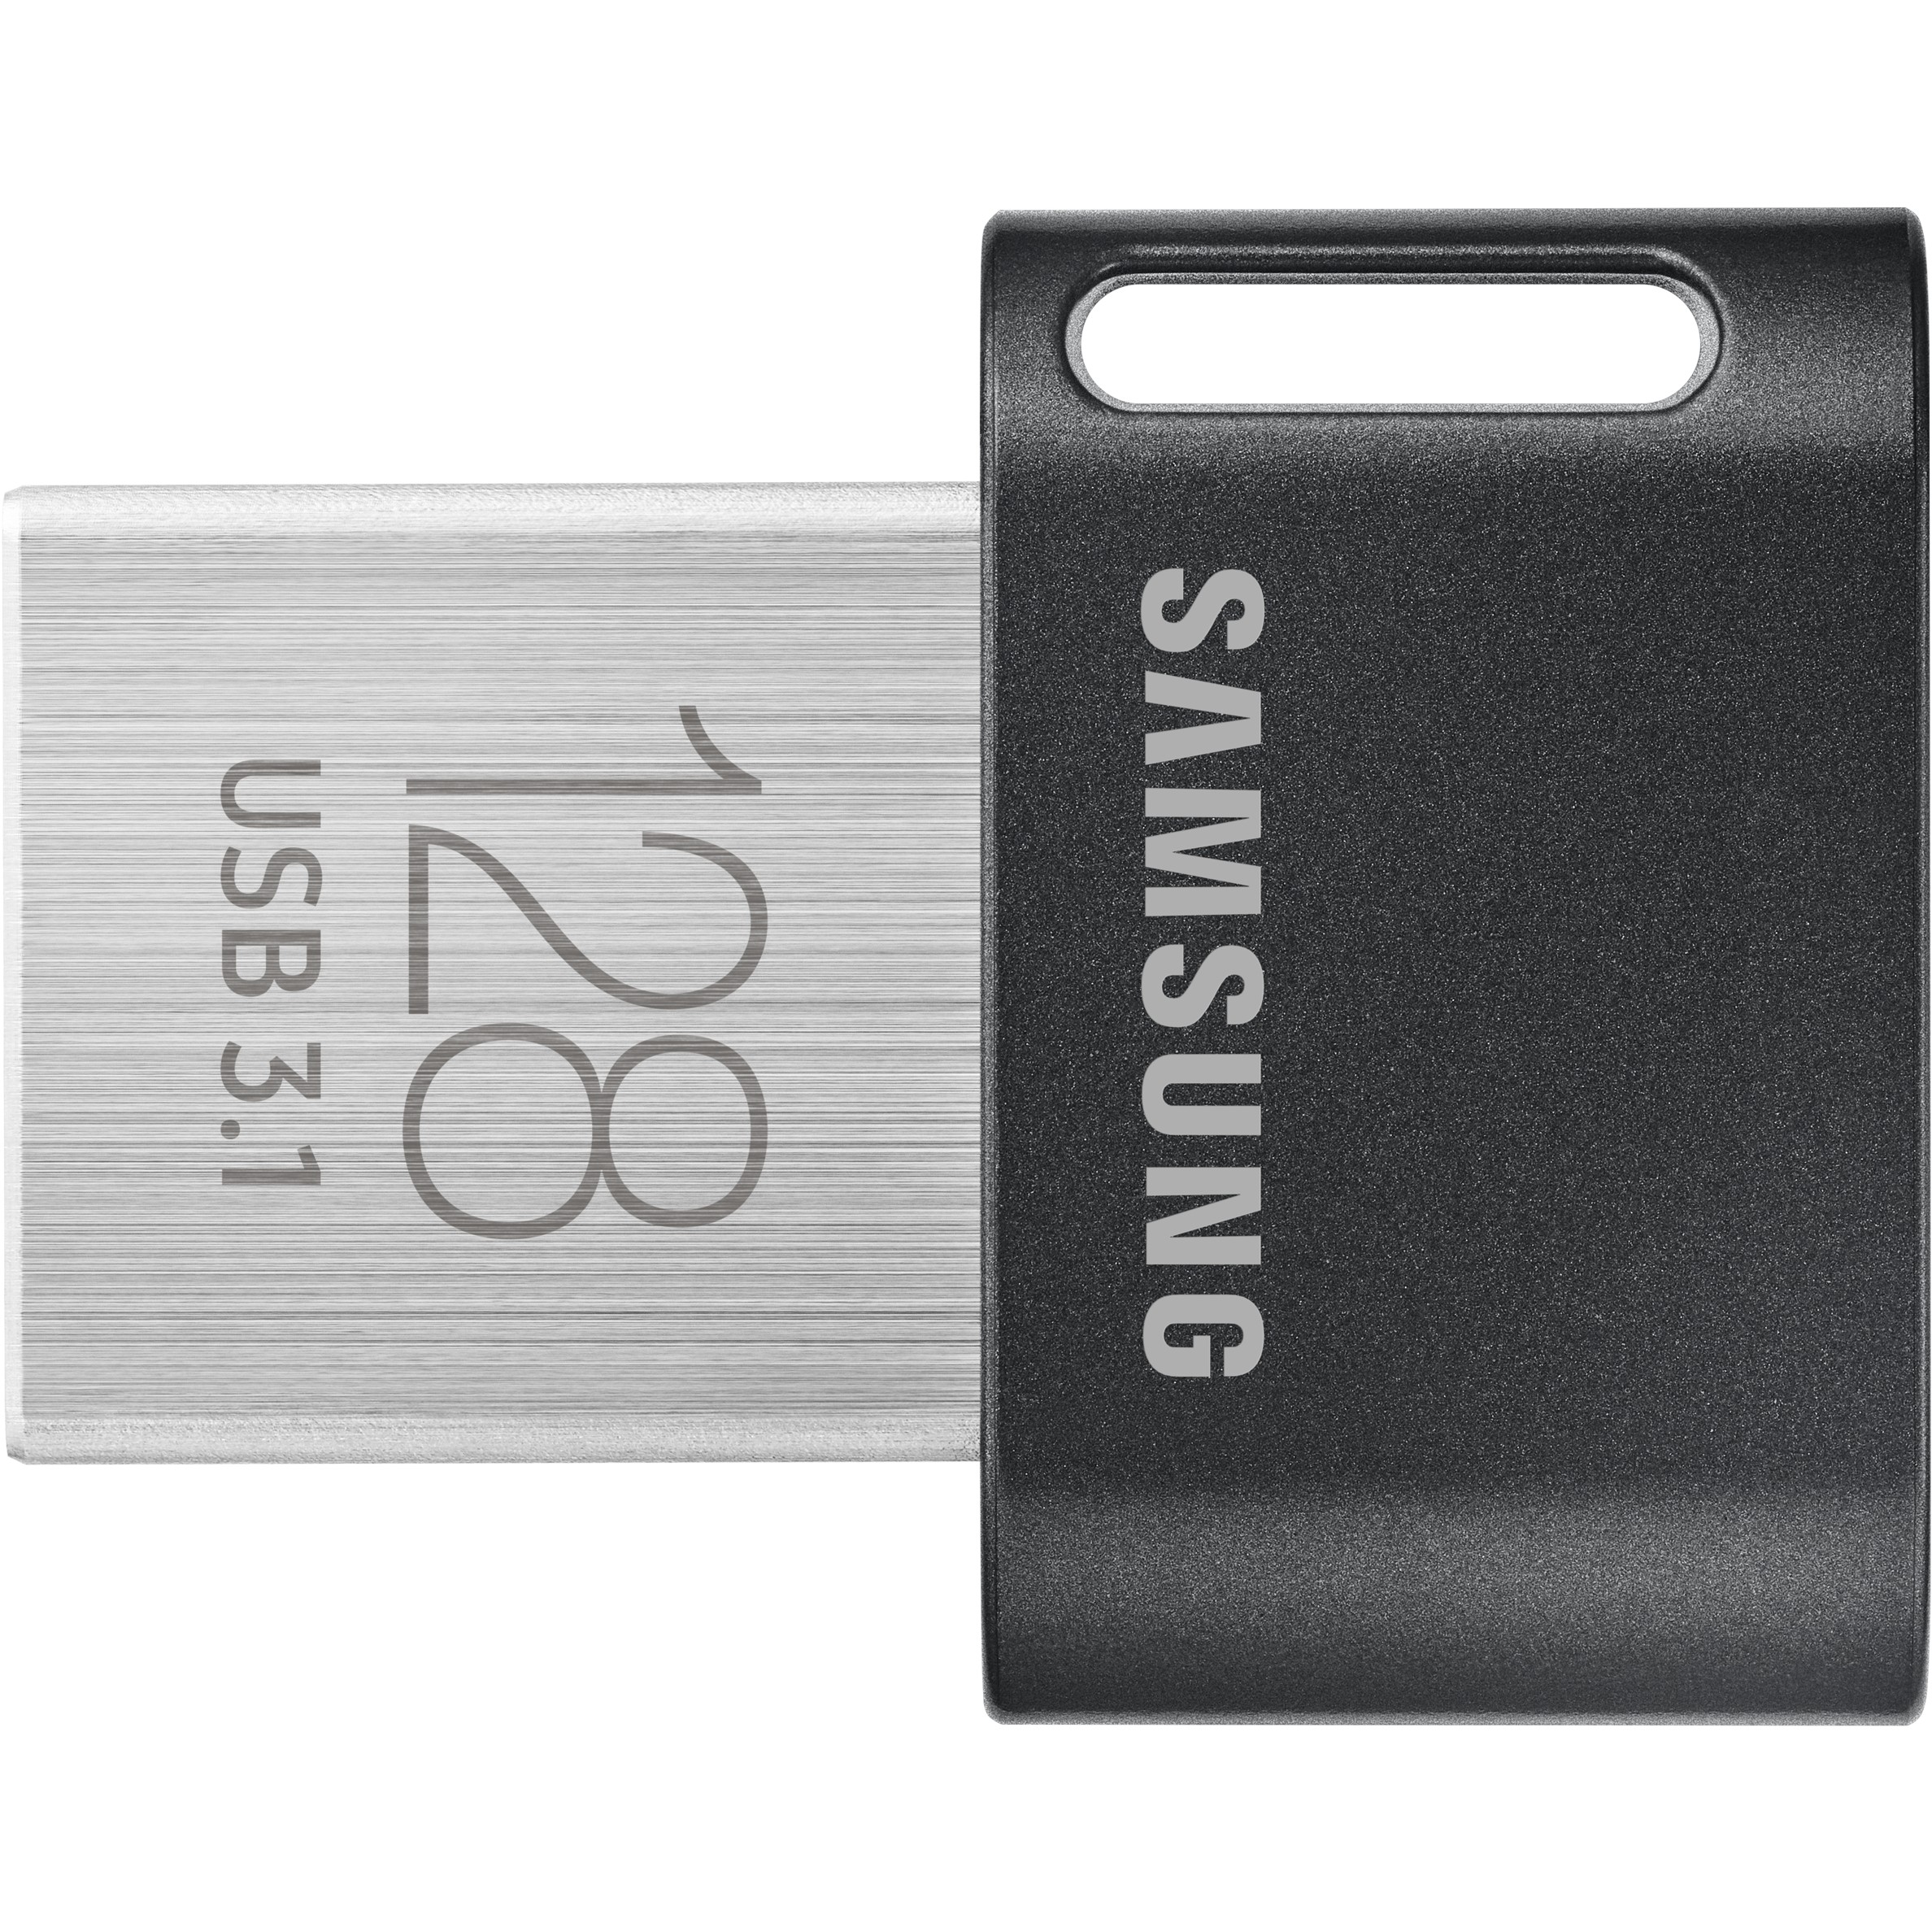 Samsung MUF-128AB USB flash drive